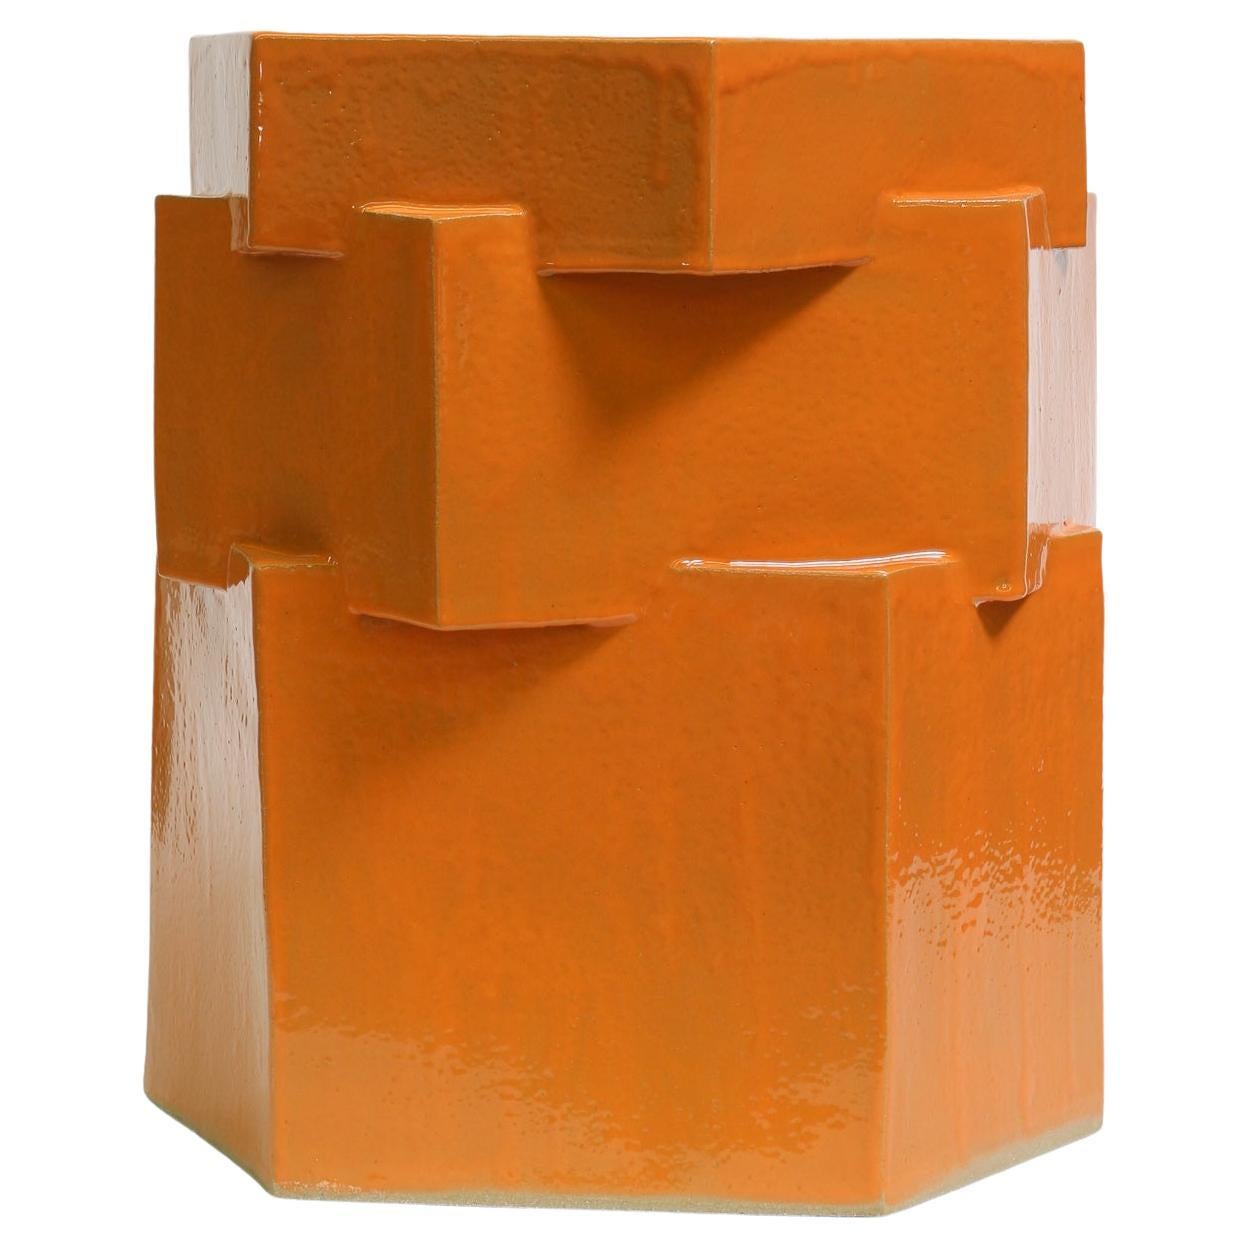 Three-Tier Ceramic Hex Planter in Gloss Orange by Bzippy For Sale